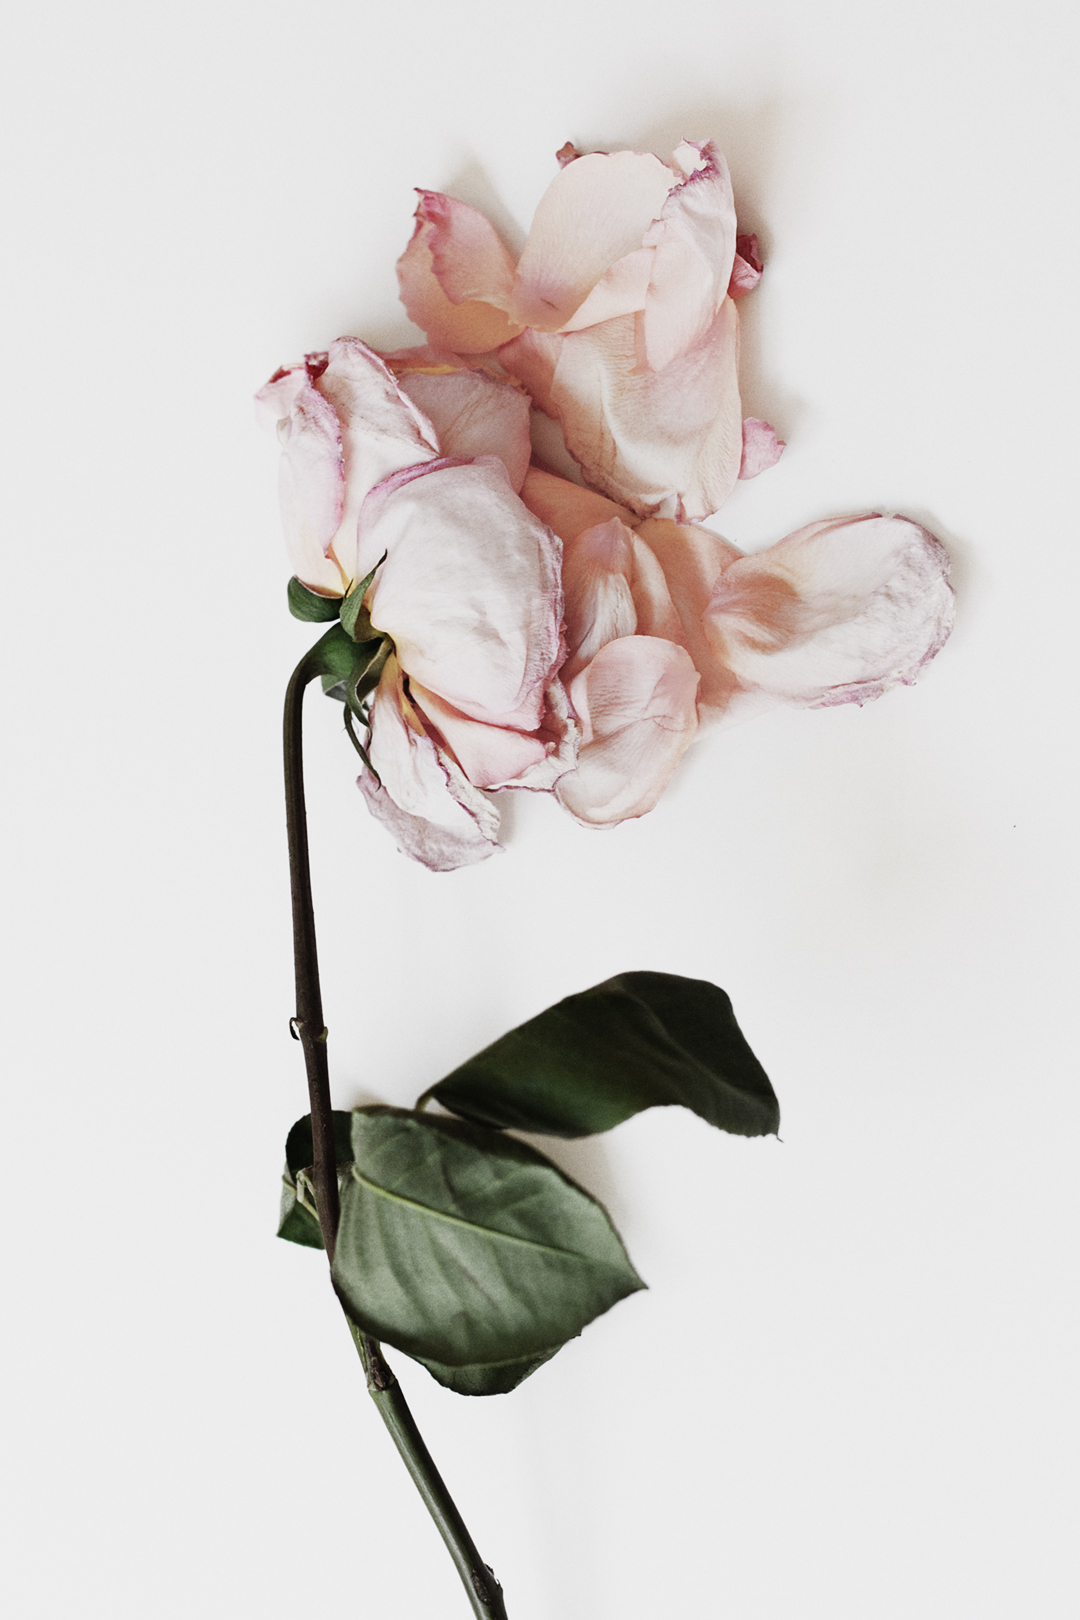 Dead rose i by tristan b.